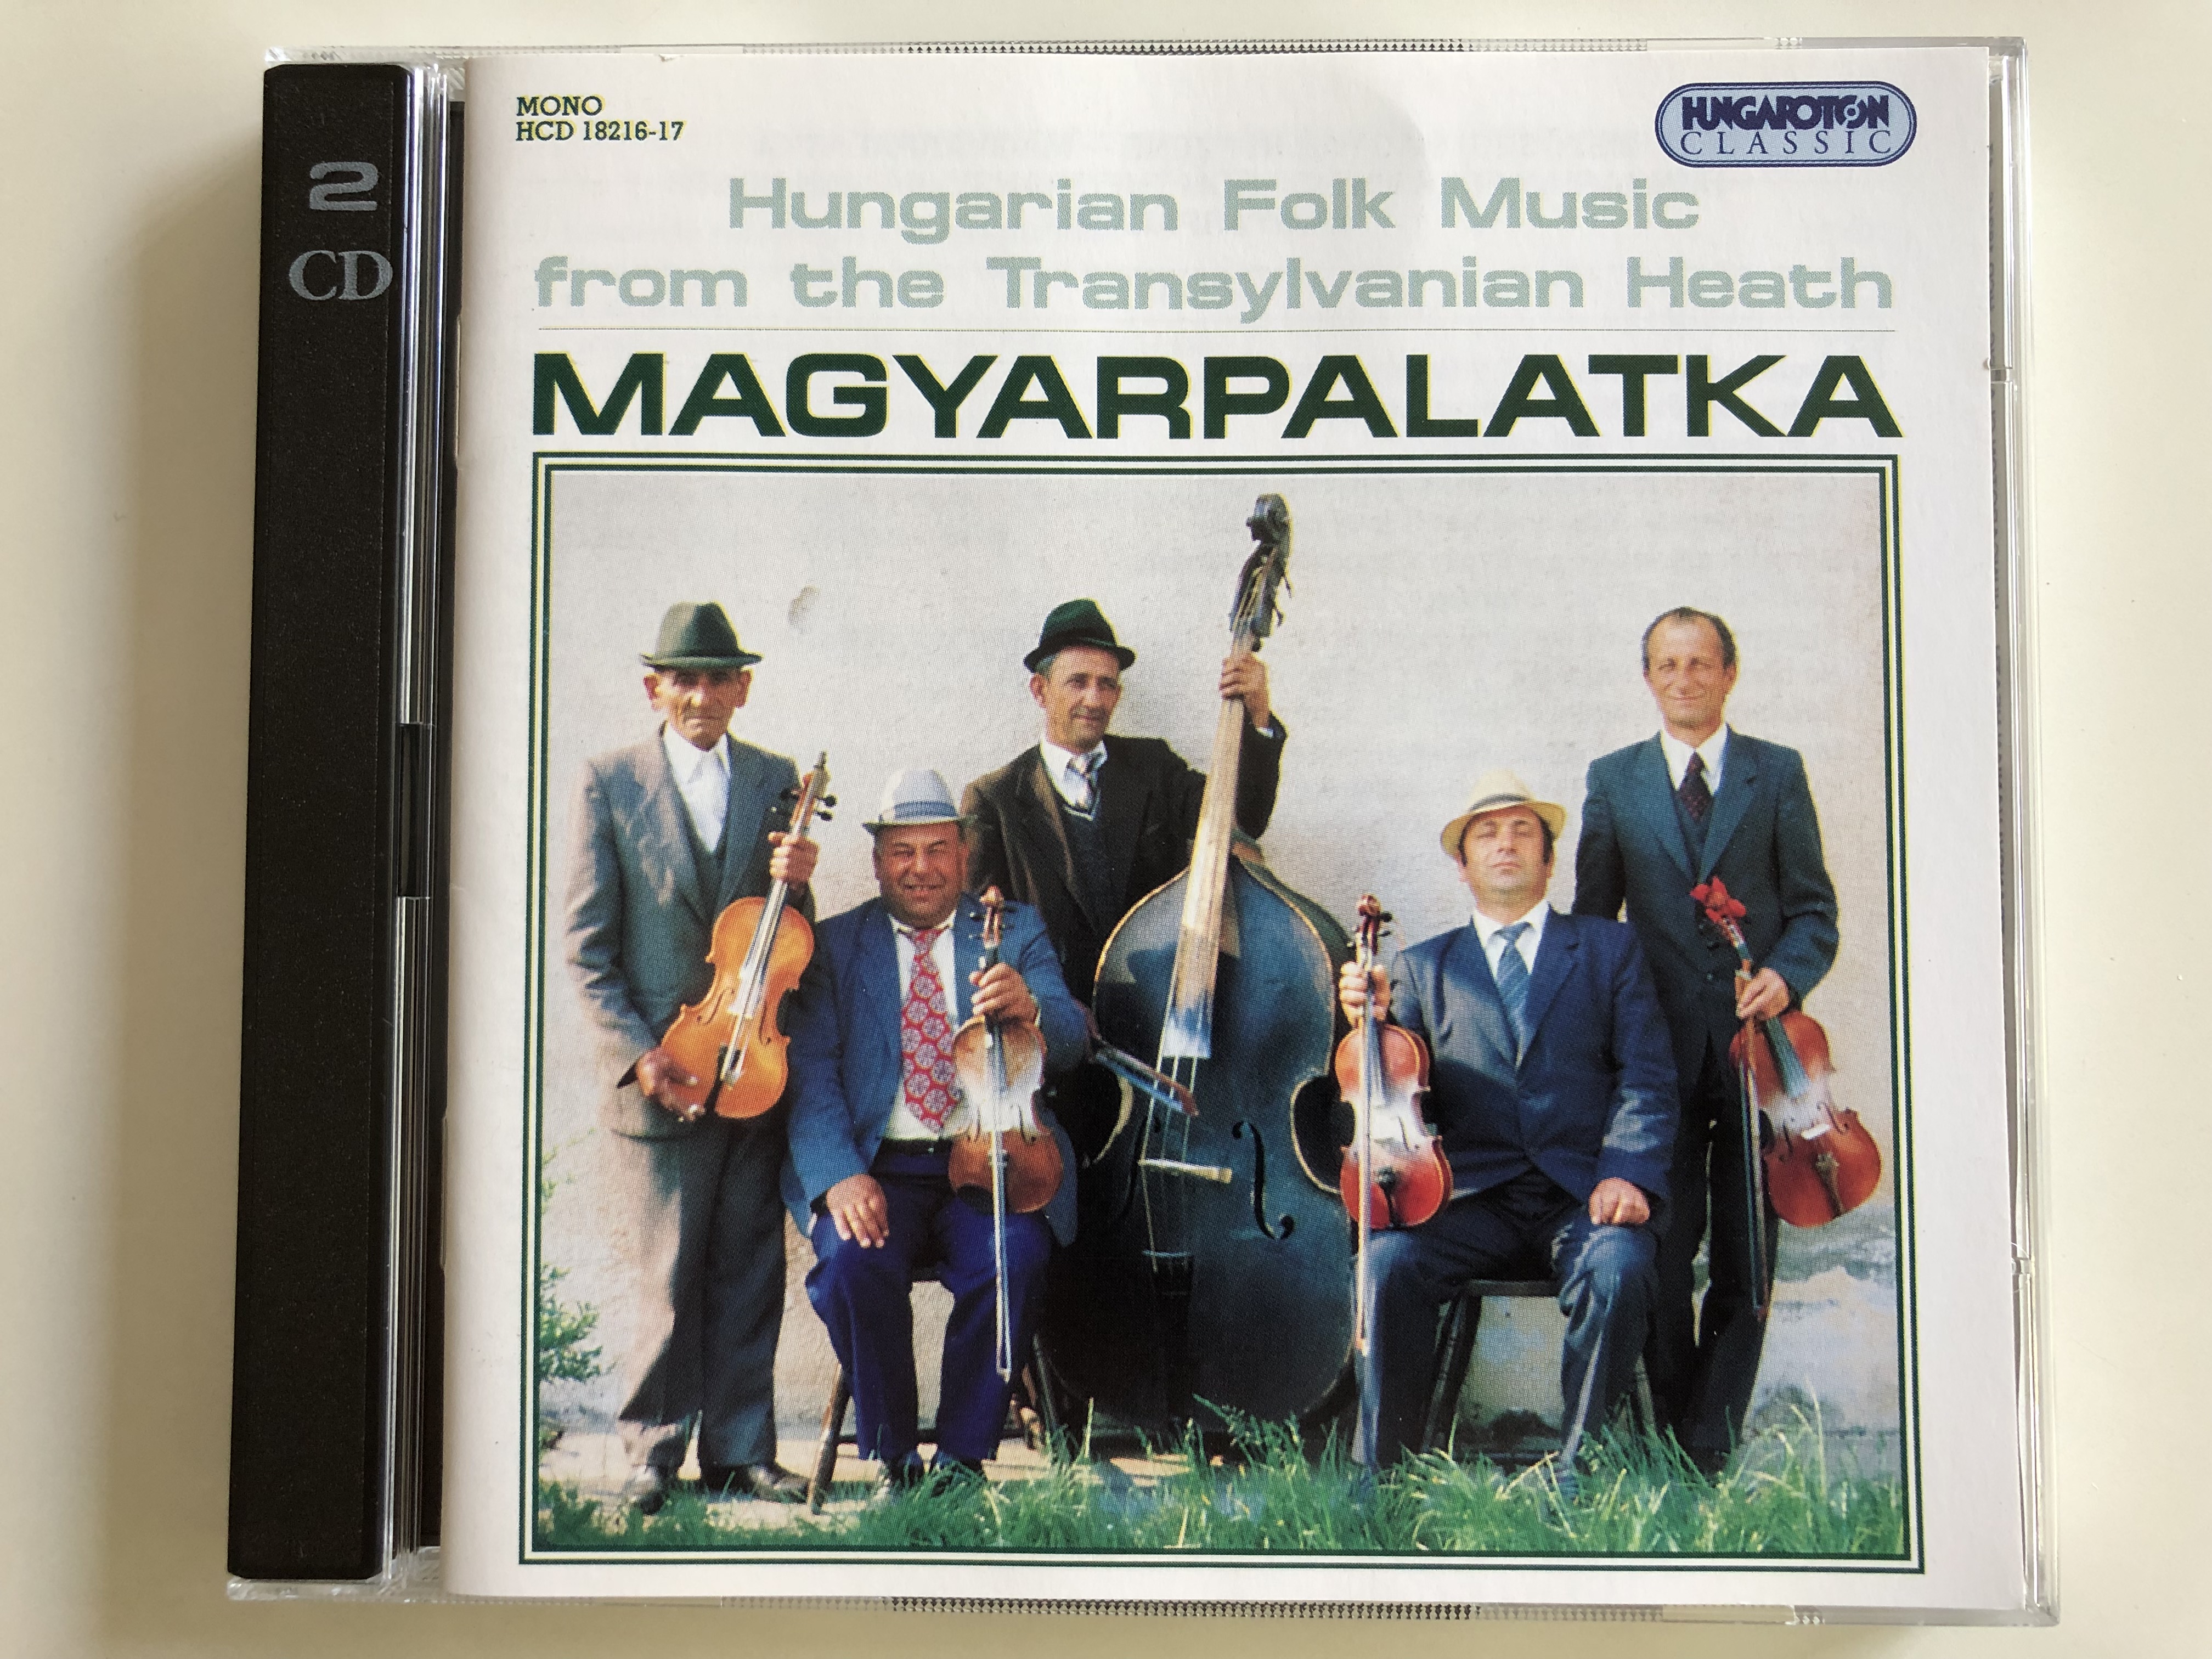 hungarian-folk-music-from-the-transylvanian-heath-magyarpalatka-hungaroton-2x-audio-cd-mono-1996-hcd-18216-17-1-.jpg